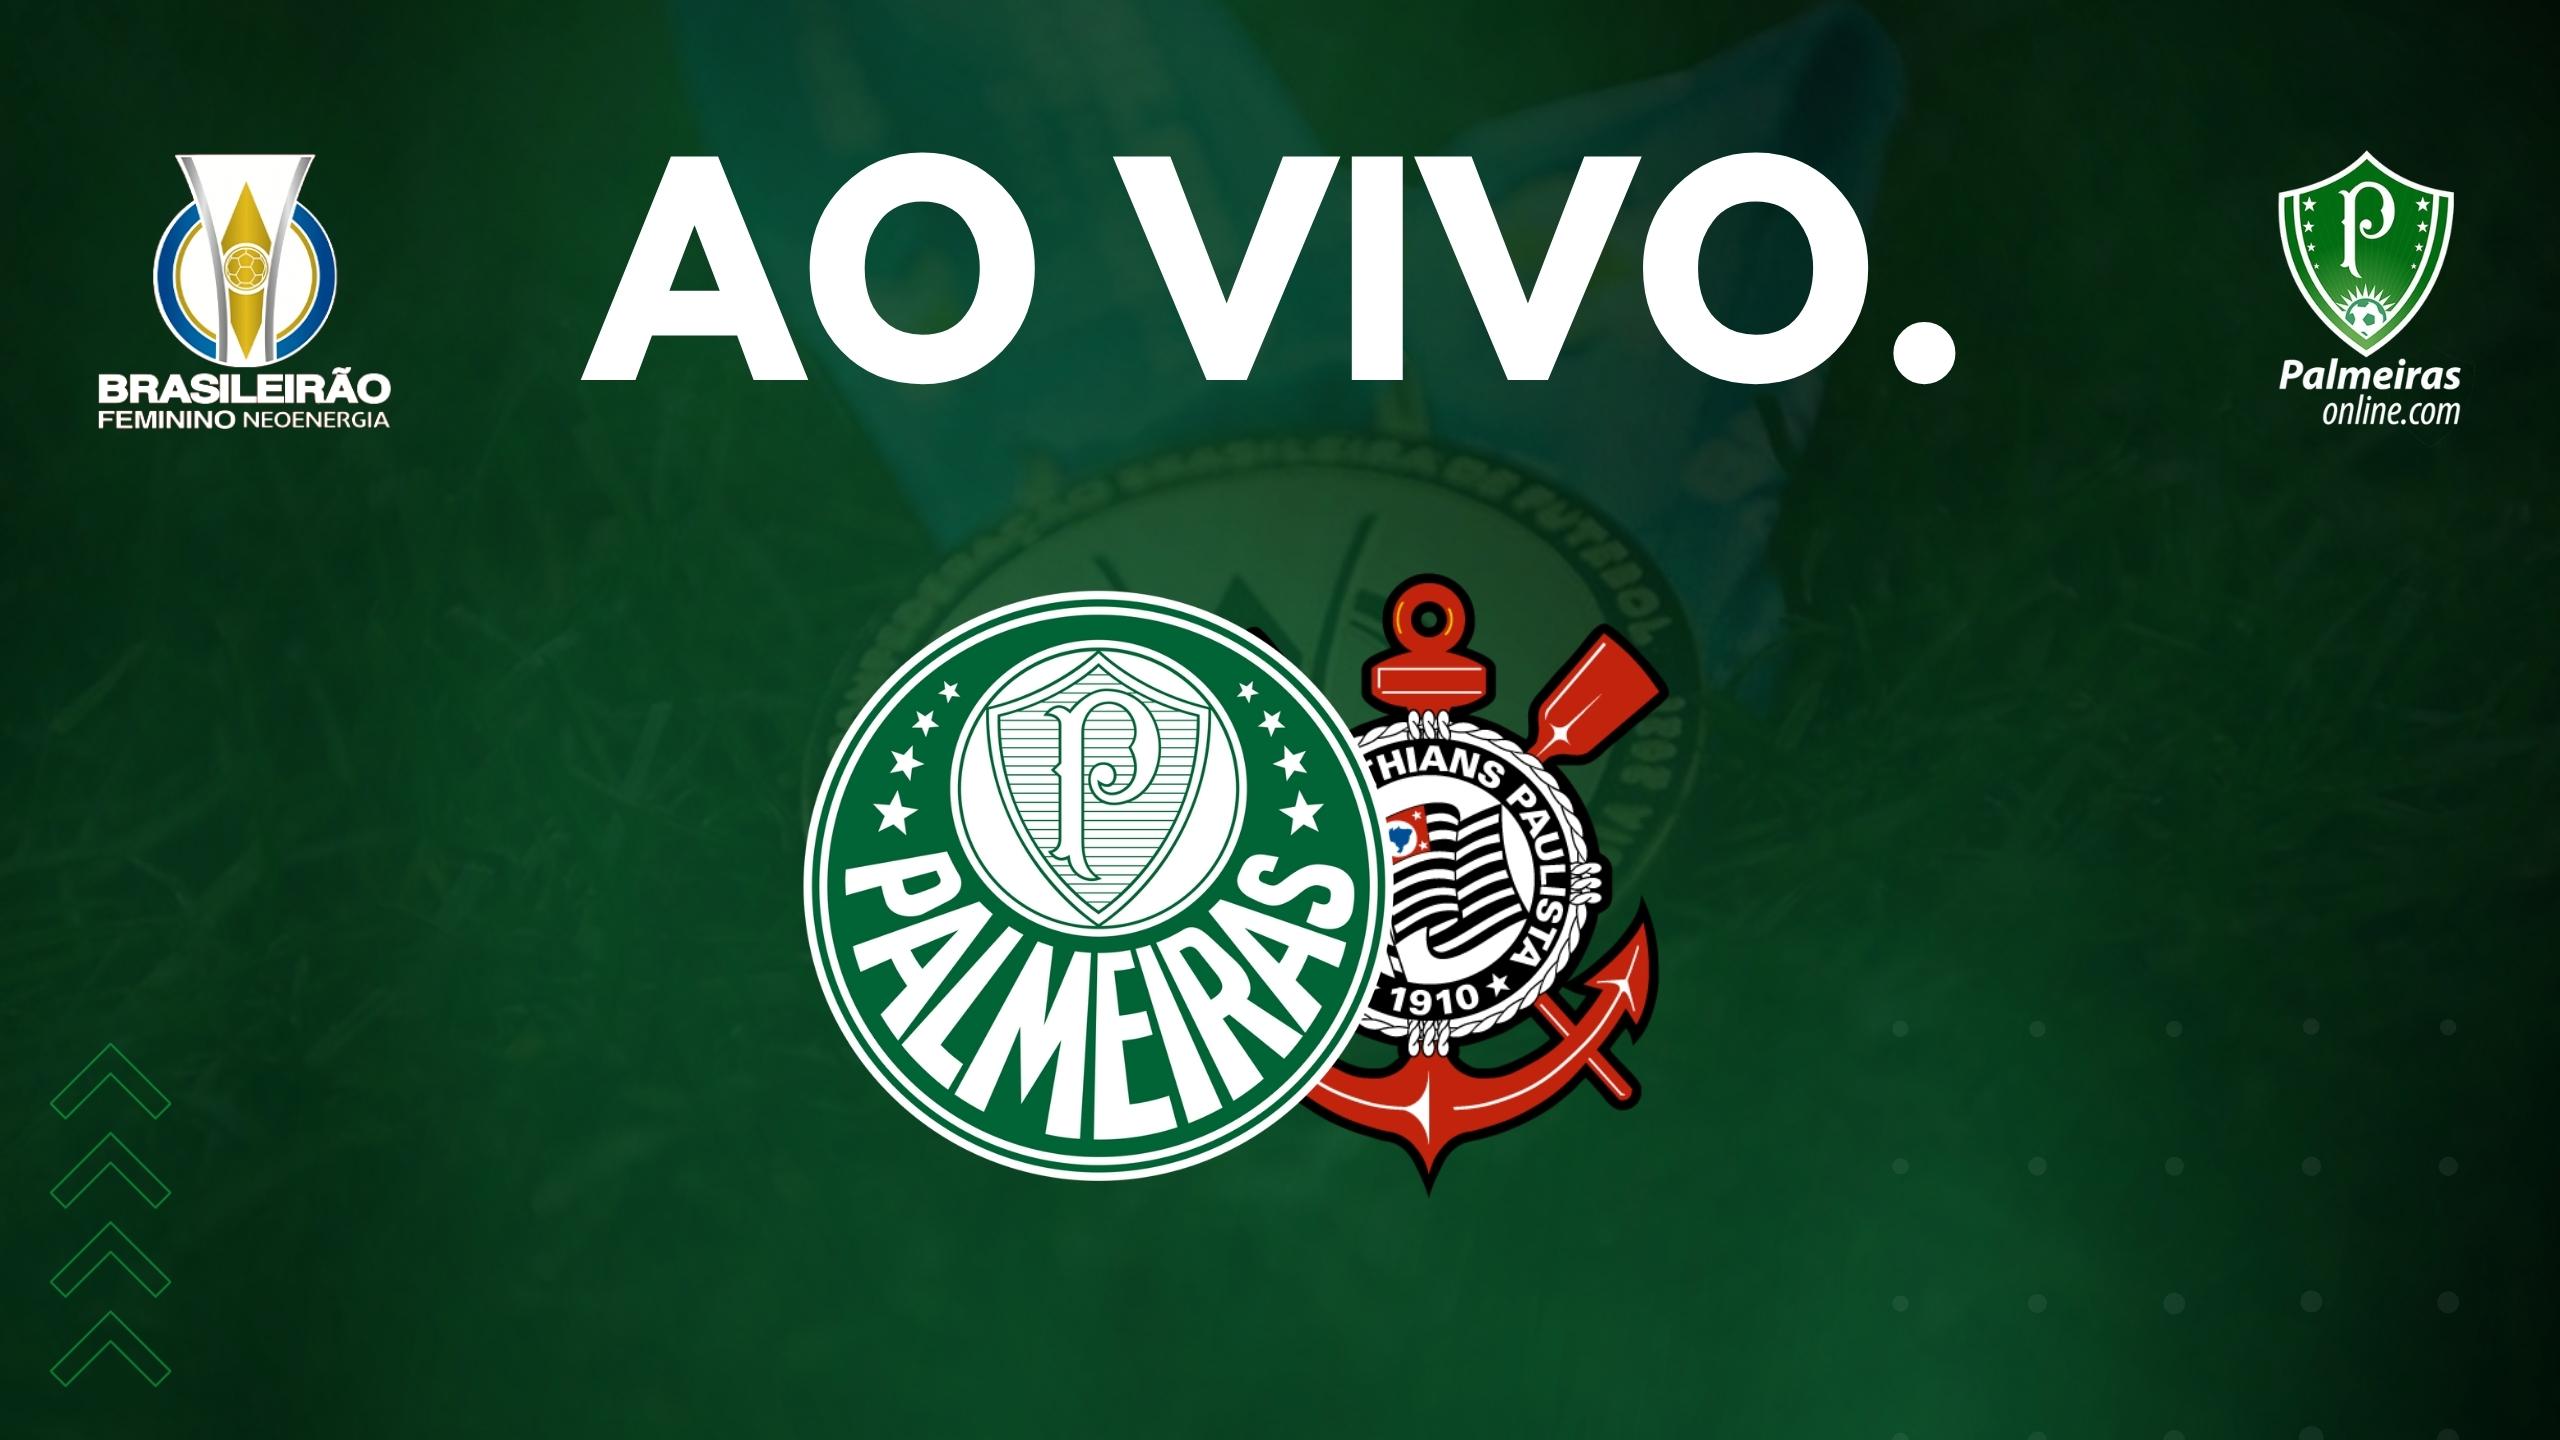 Real Brasília x Corinthians ao vivo e online, onde assistir, que